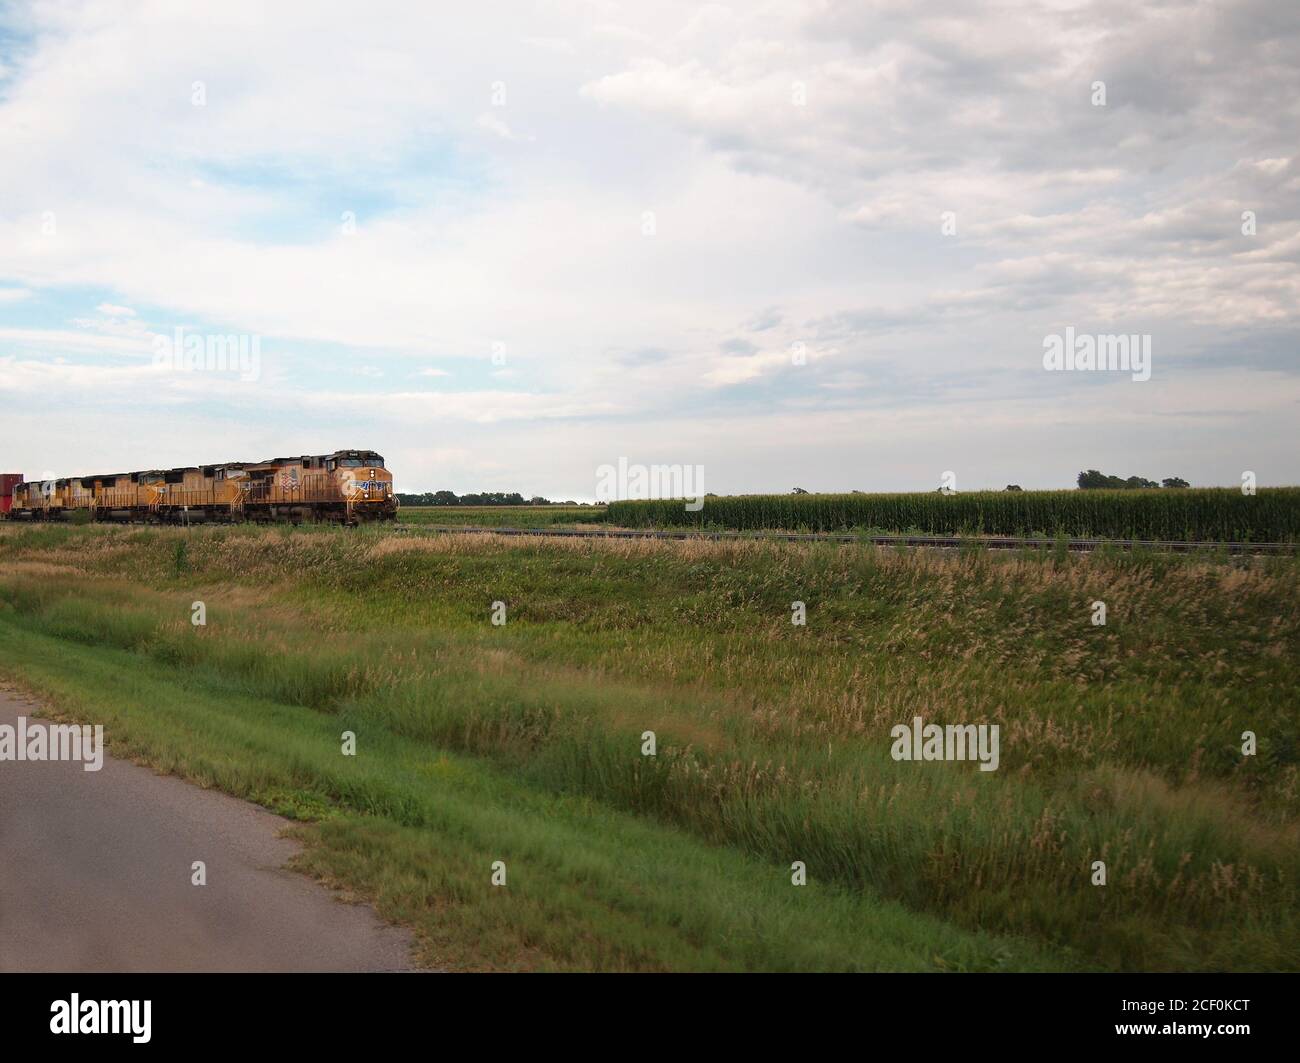 WOOD RIVER, NEBRASKA - JULY 26, 2018: A bright yellow Union Pacific Railroad train approaches a corn field as it crosses the rural Nebraska farmlands Stock Photo